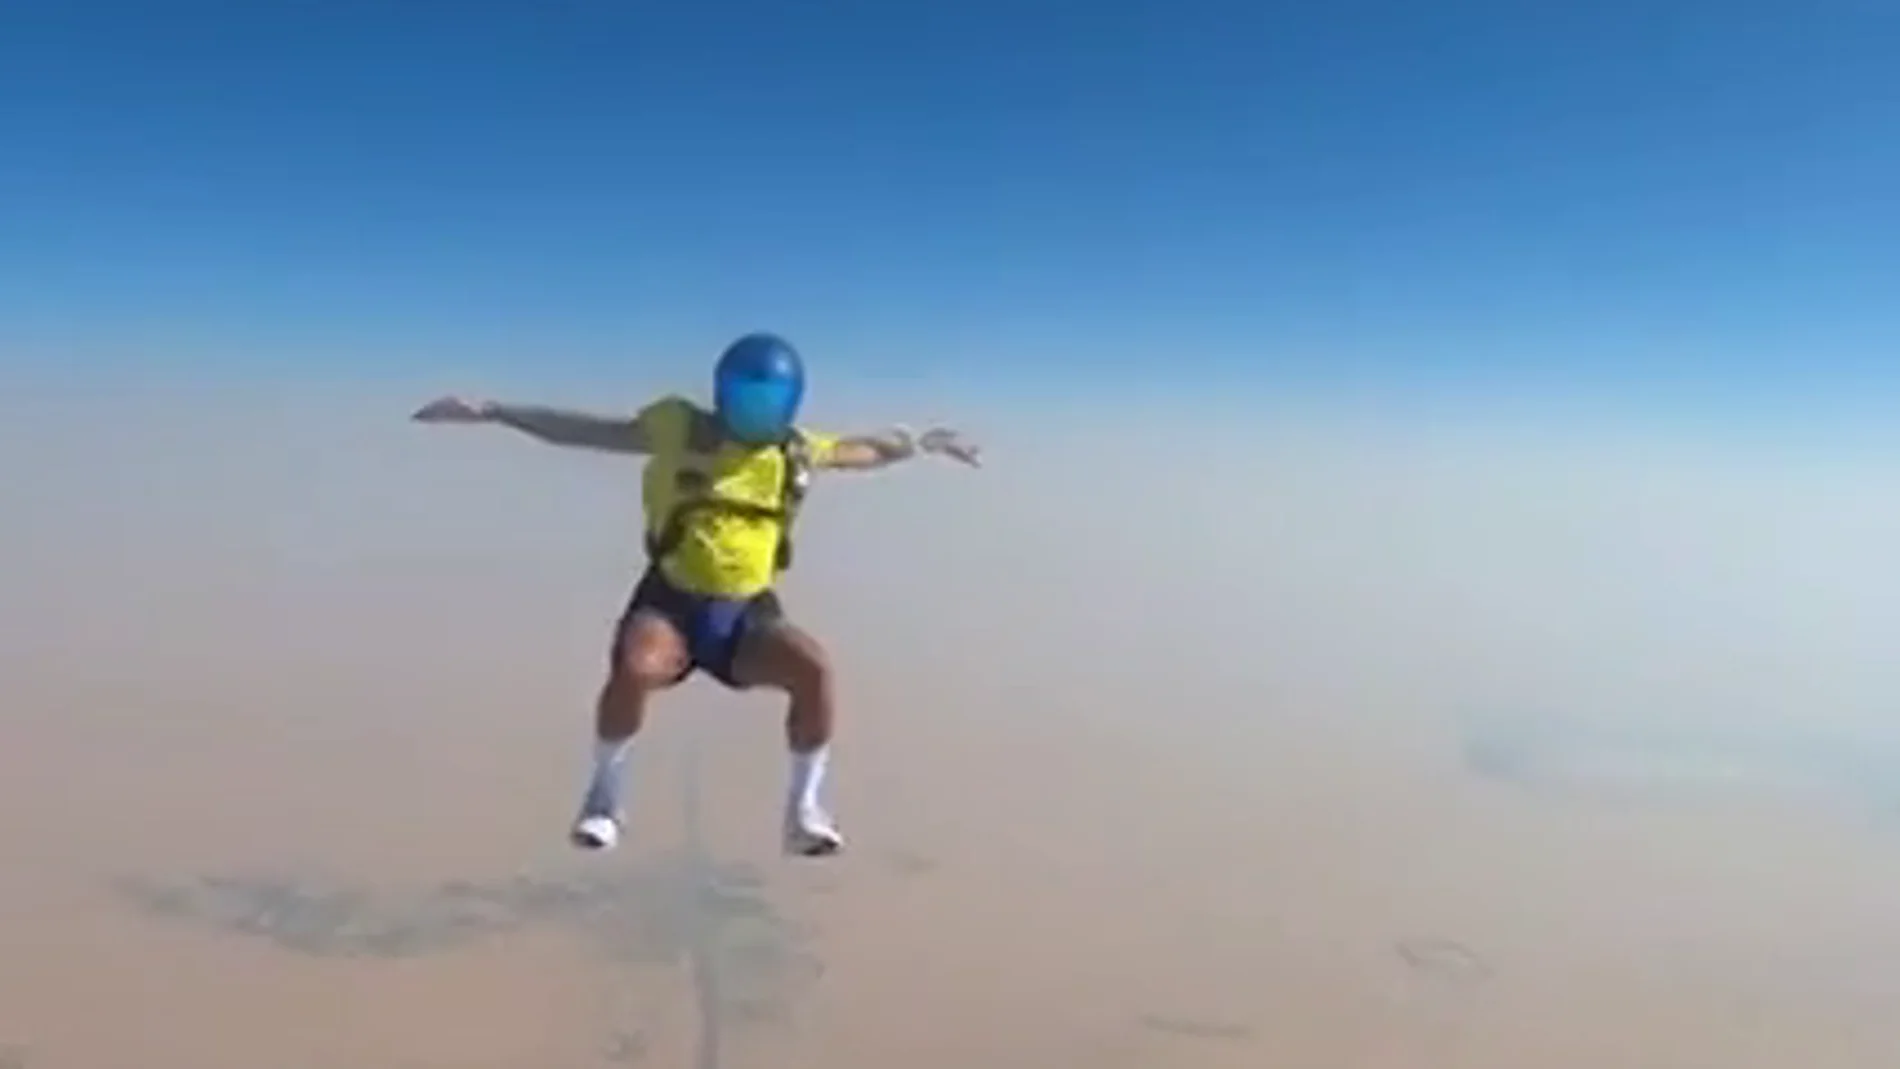 Hamilton disfruta en Dubai saltando en paracaídas 10 veces en un solo día